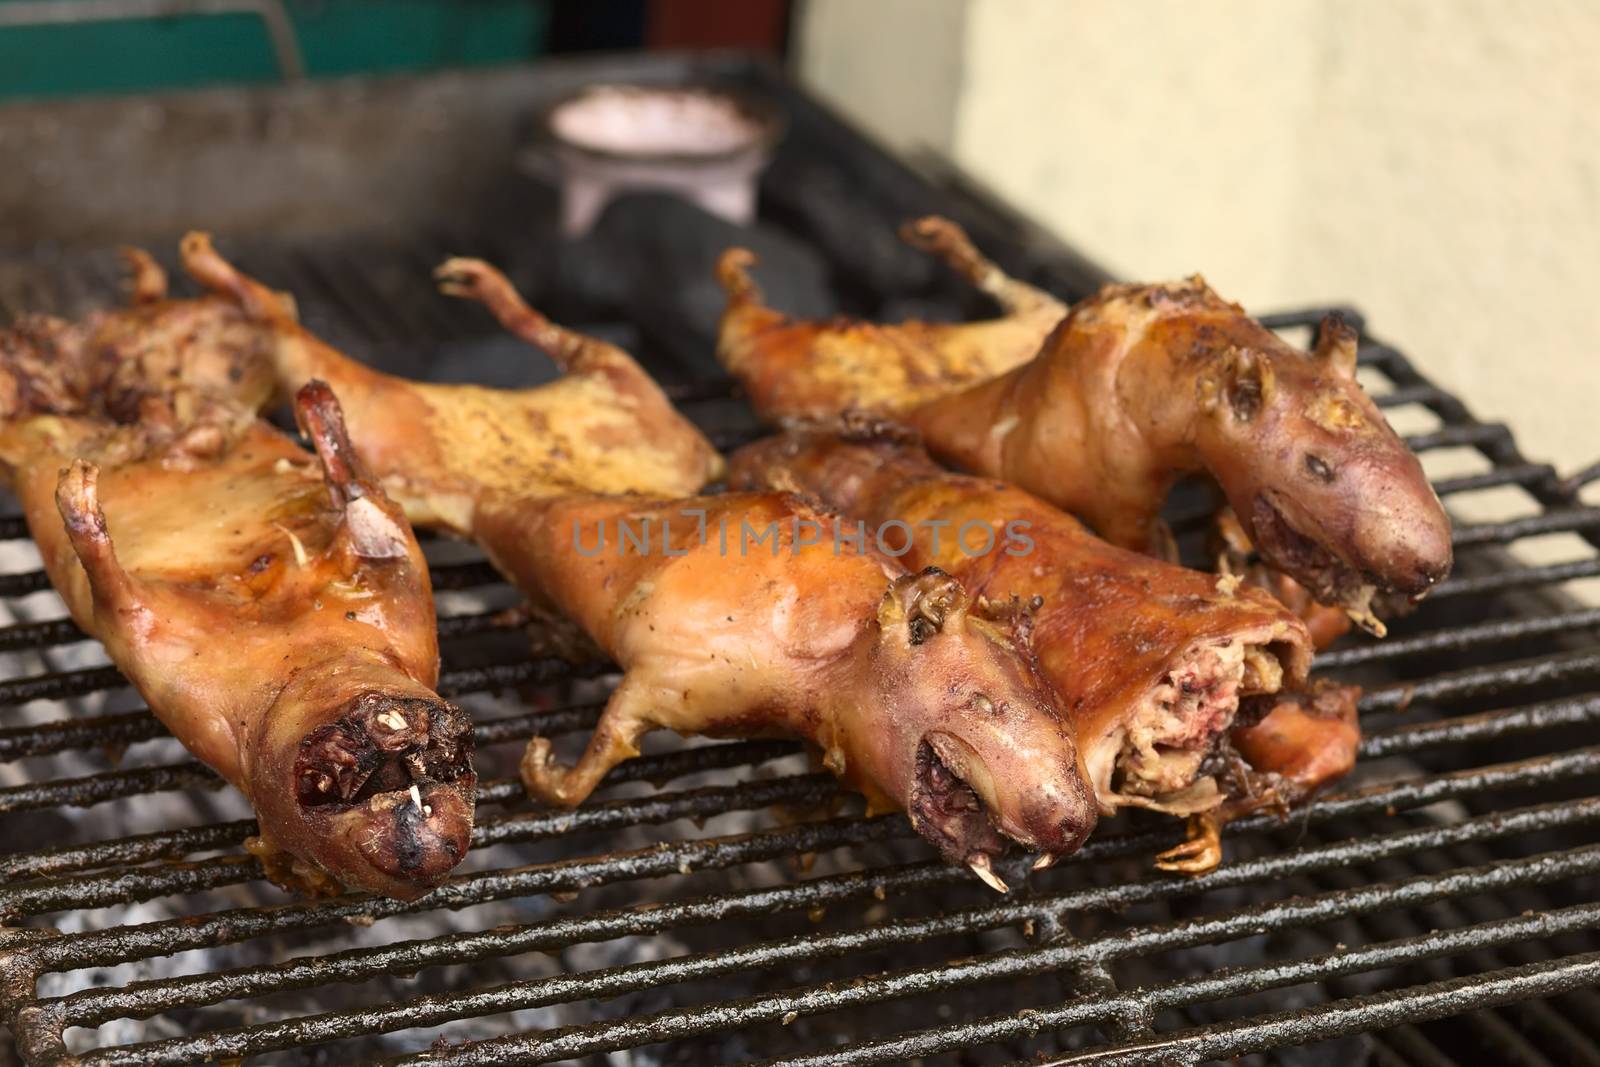 Barbecued Guinea Pig for Sale in Banos, Ecuador by ildi